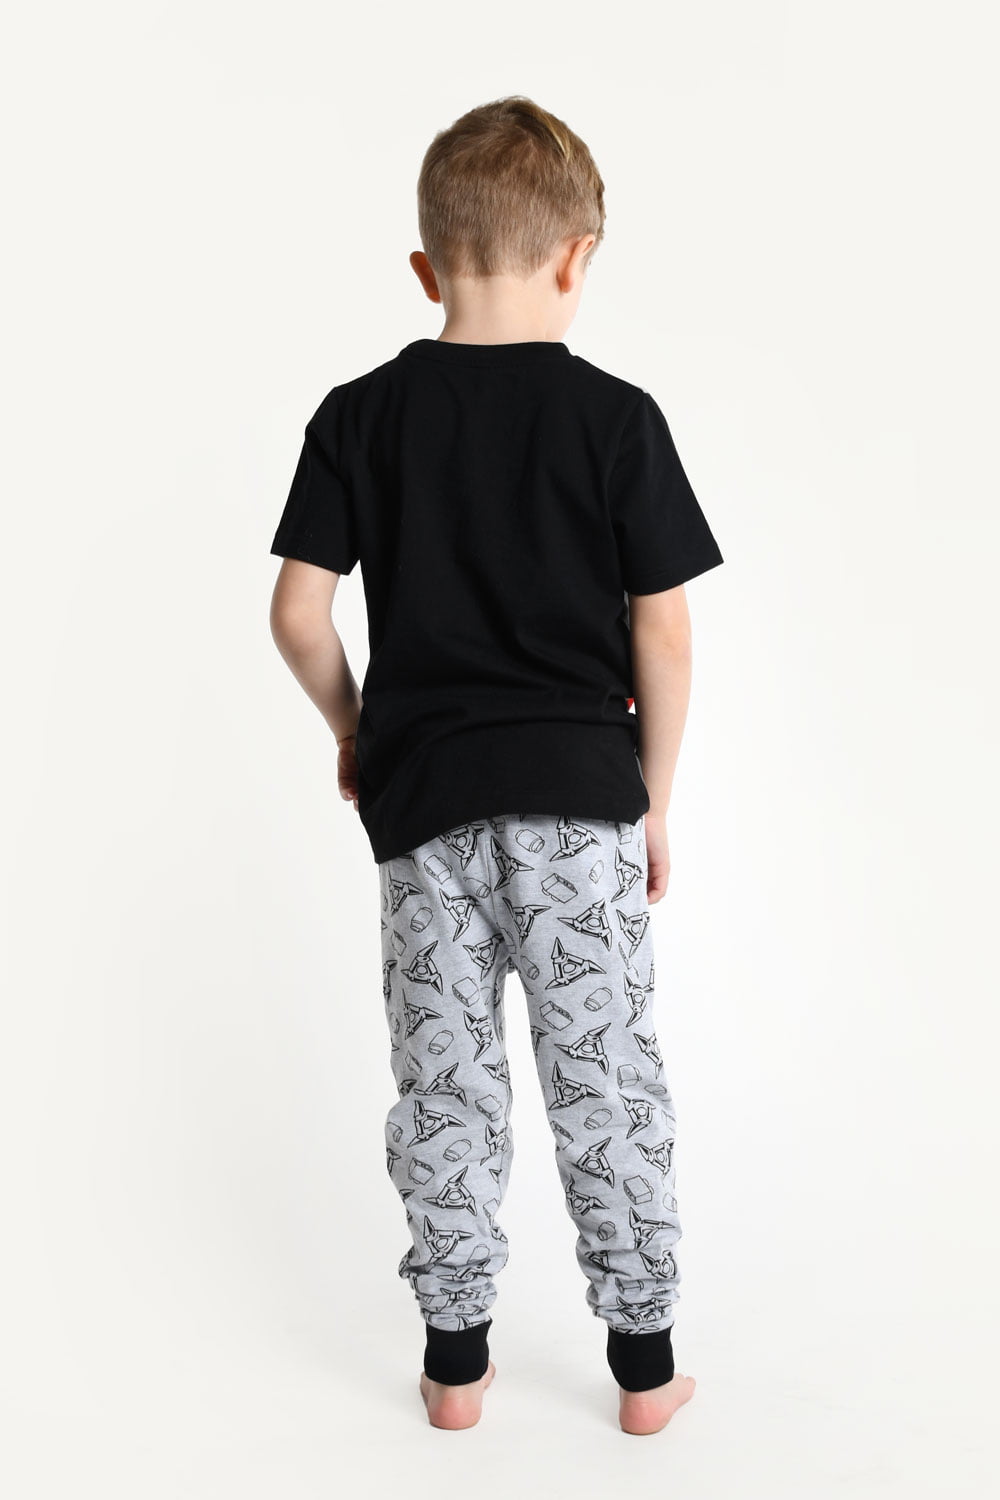 Lego Ninjago Boys BCI Cotton Pyjamas - Brand Threads